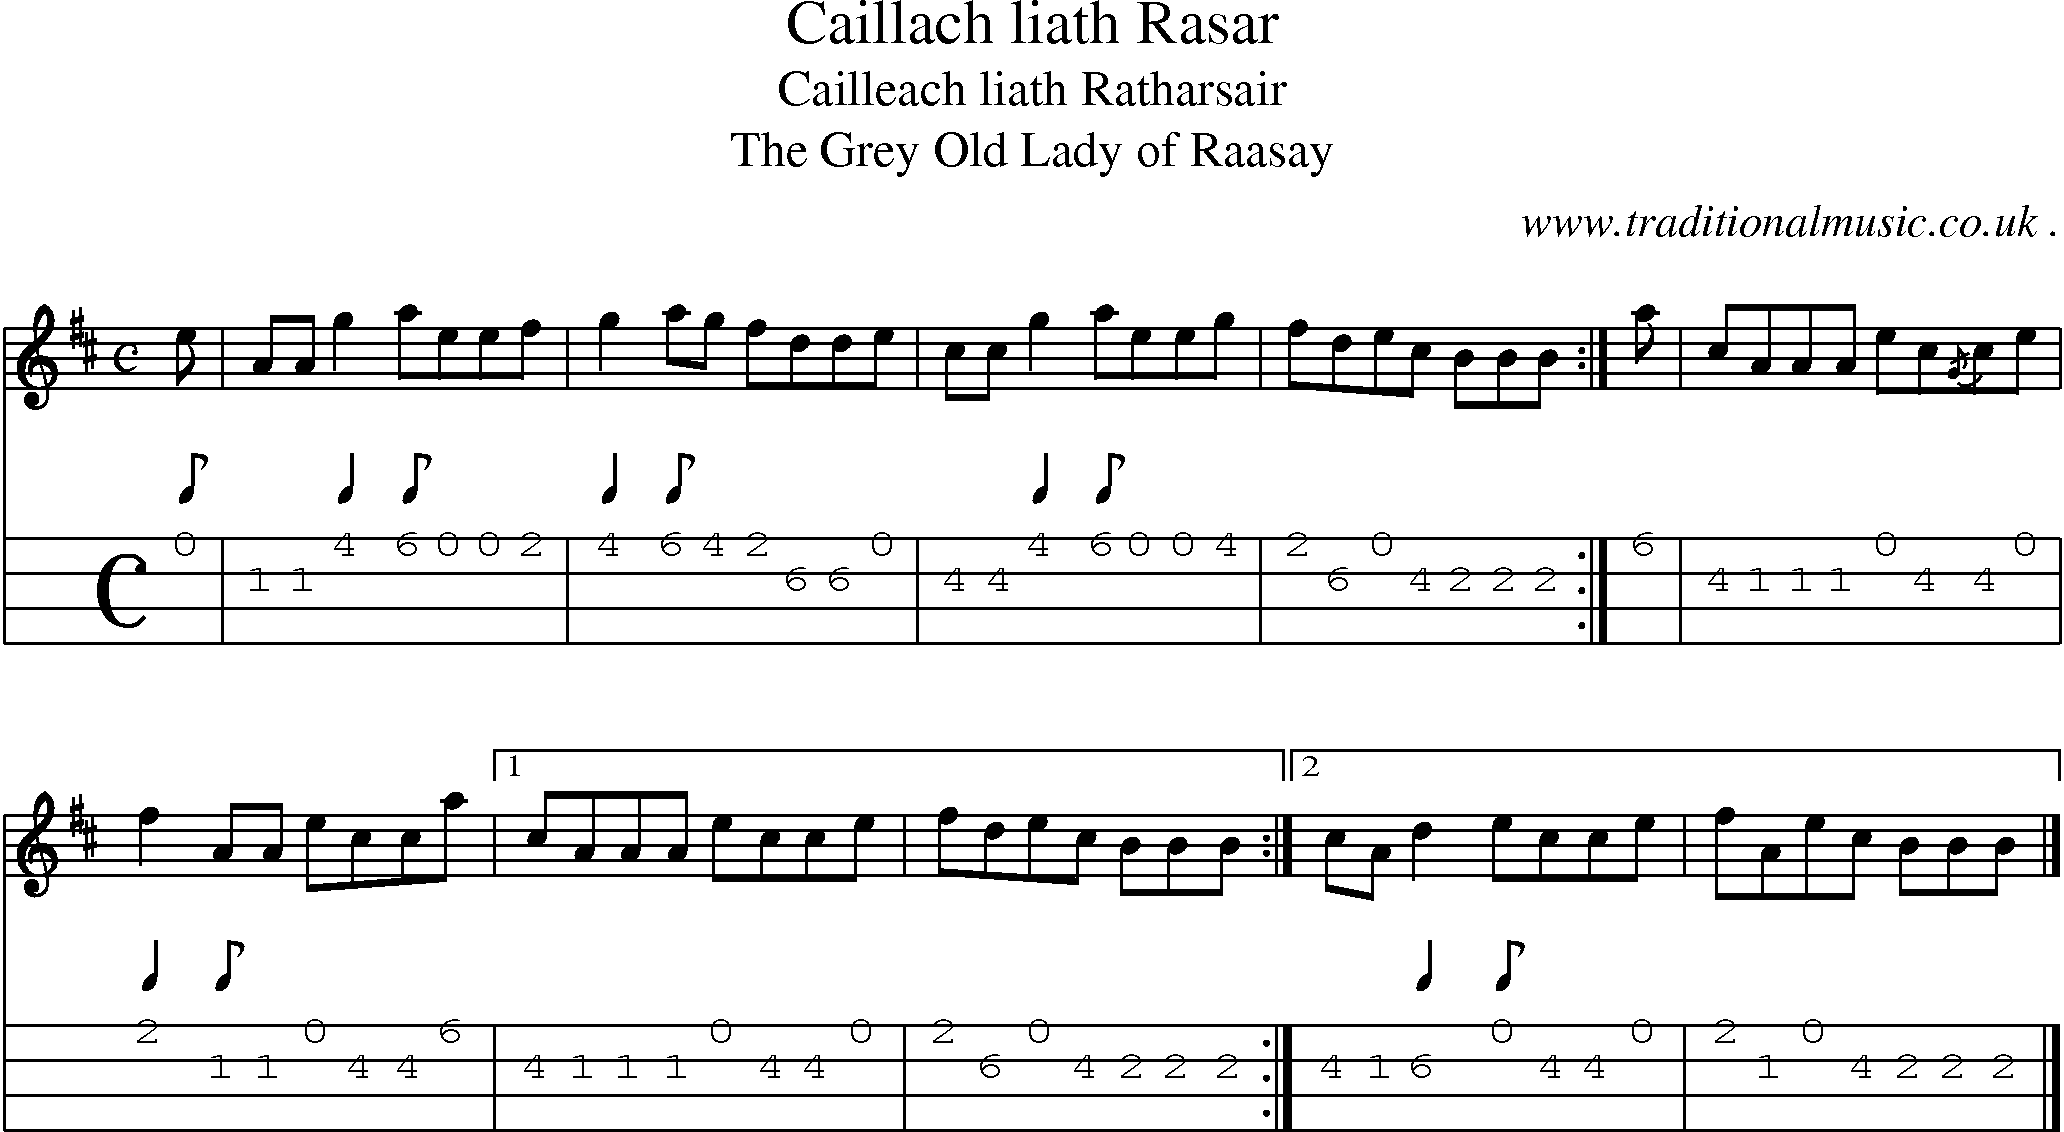 Sheet-music  score, Chords and Mandolin Tabs for Caillach Liath Rasar